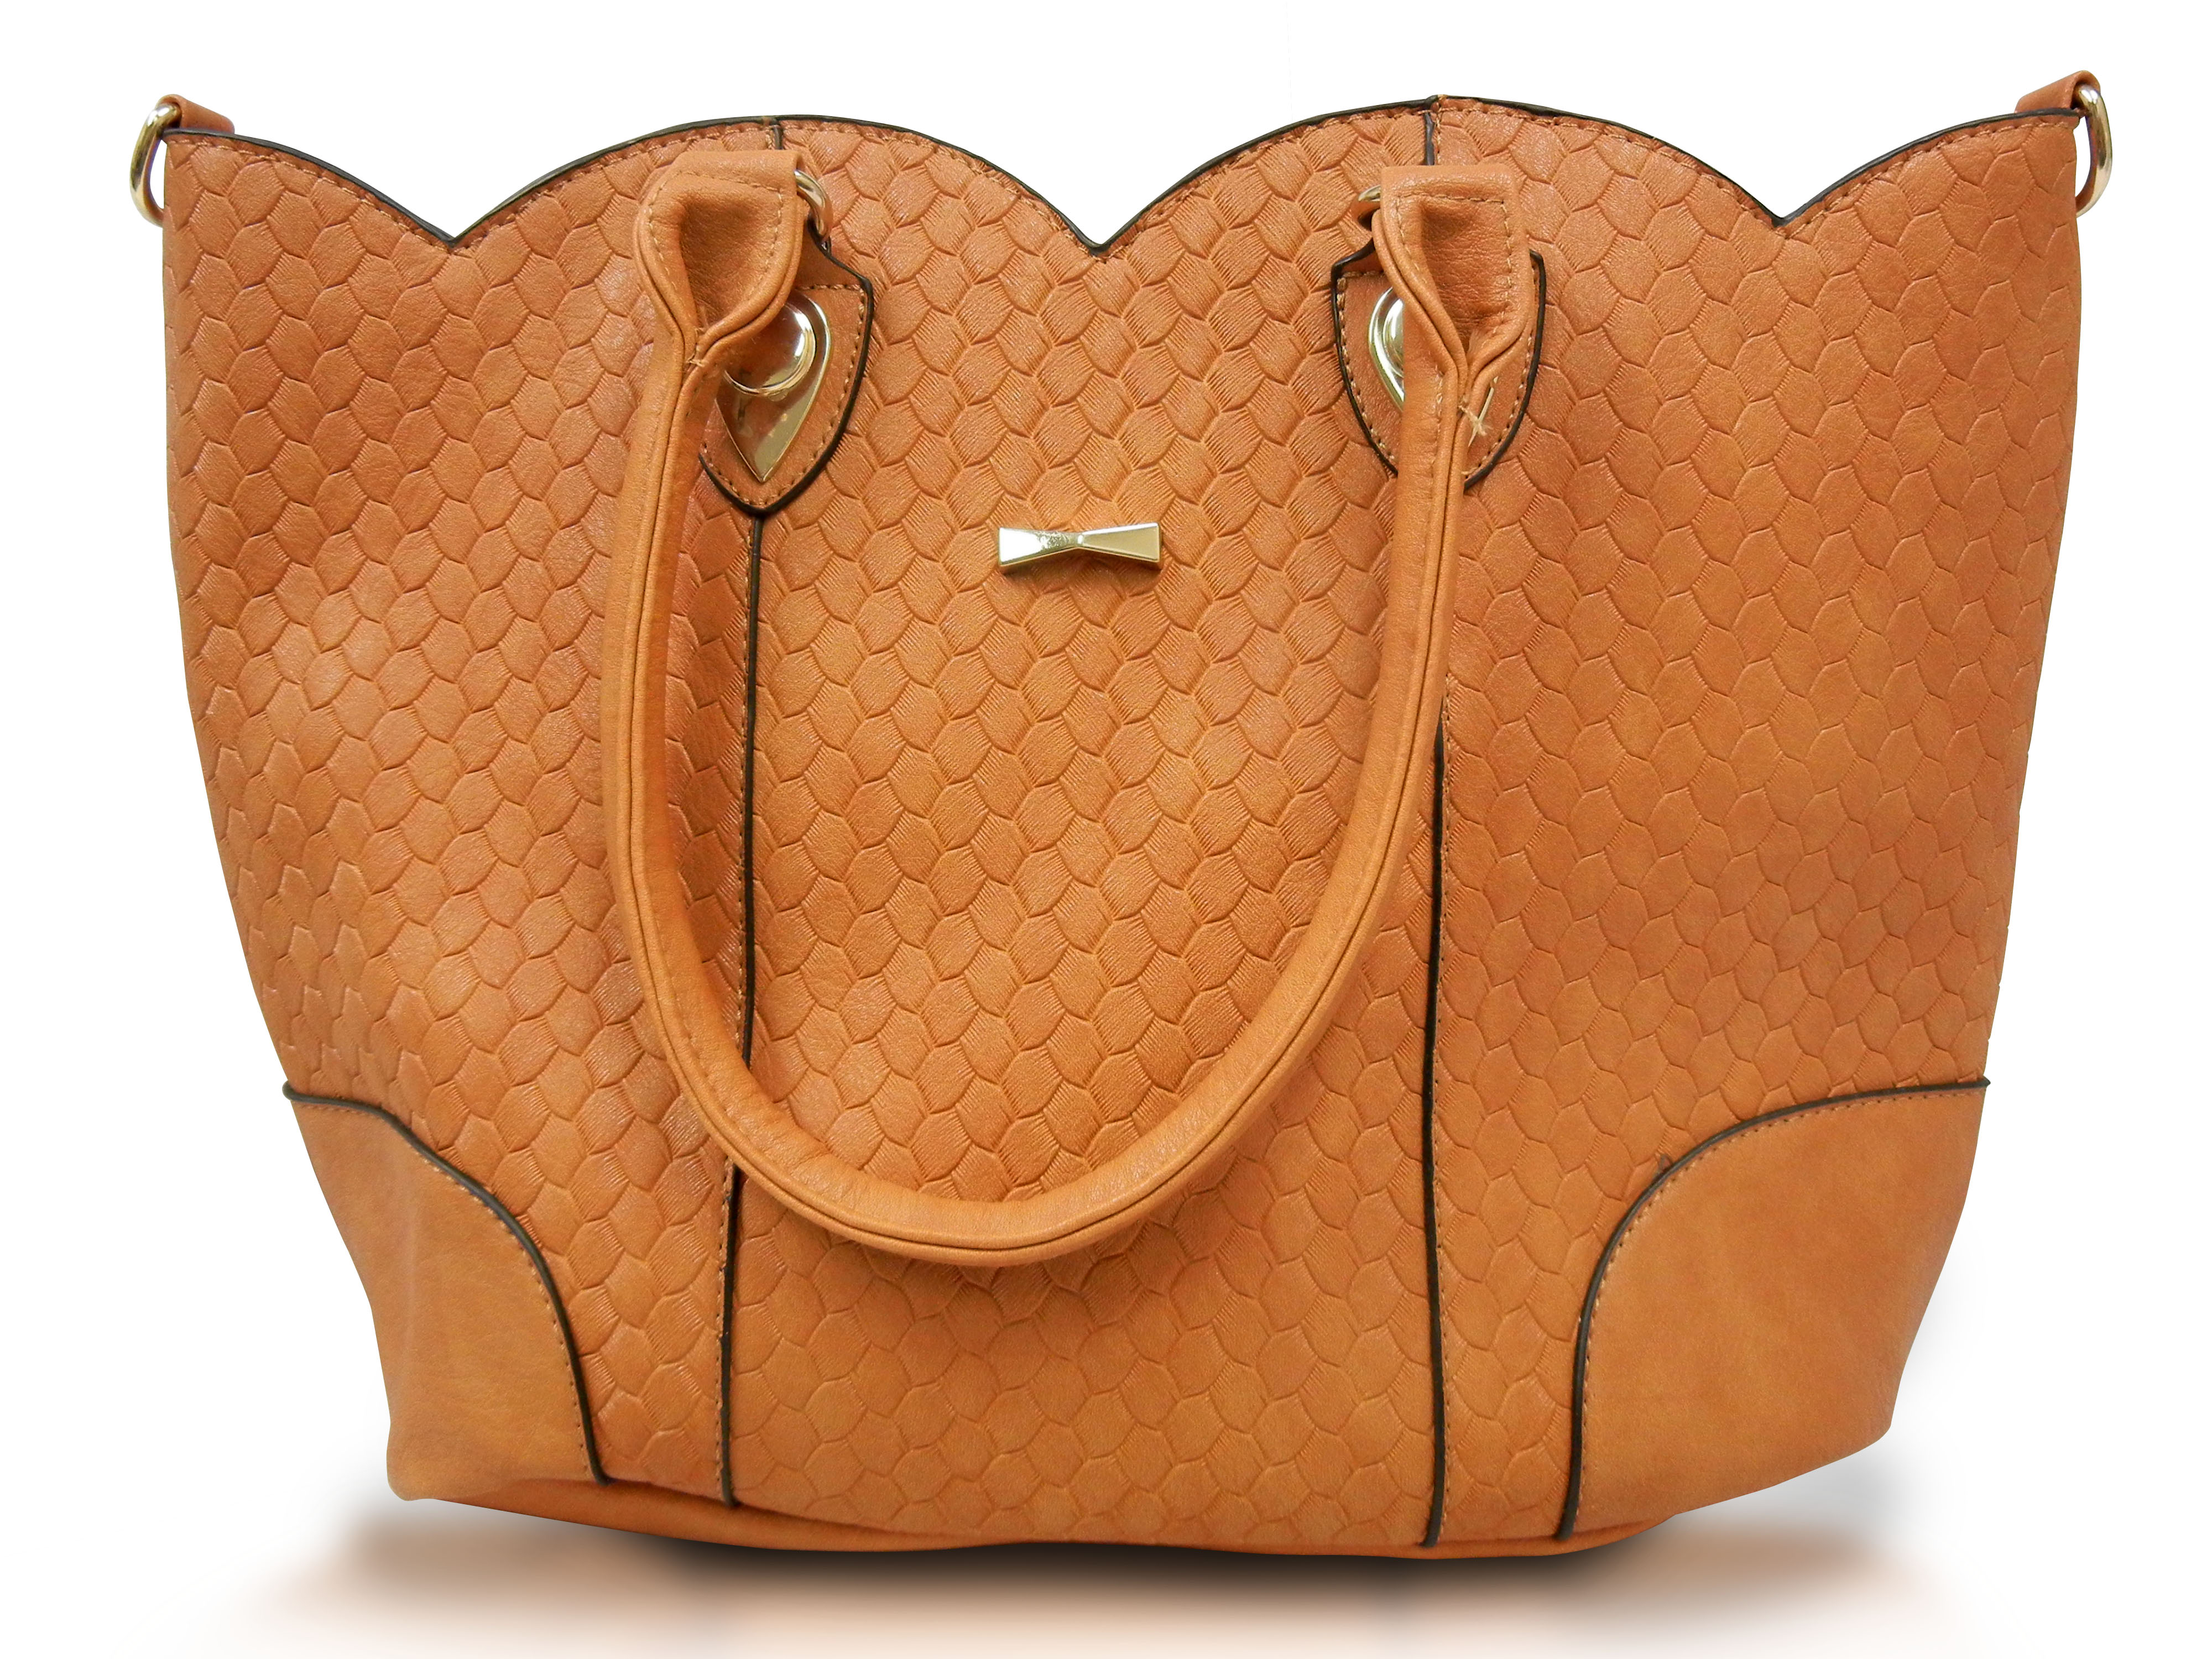 Large Ladies Handbag with removable straps,Tan, Camel color,